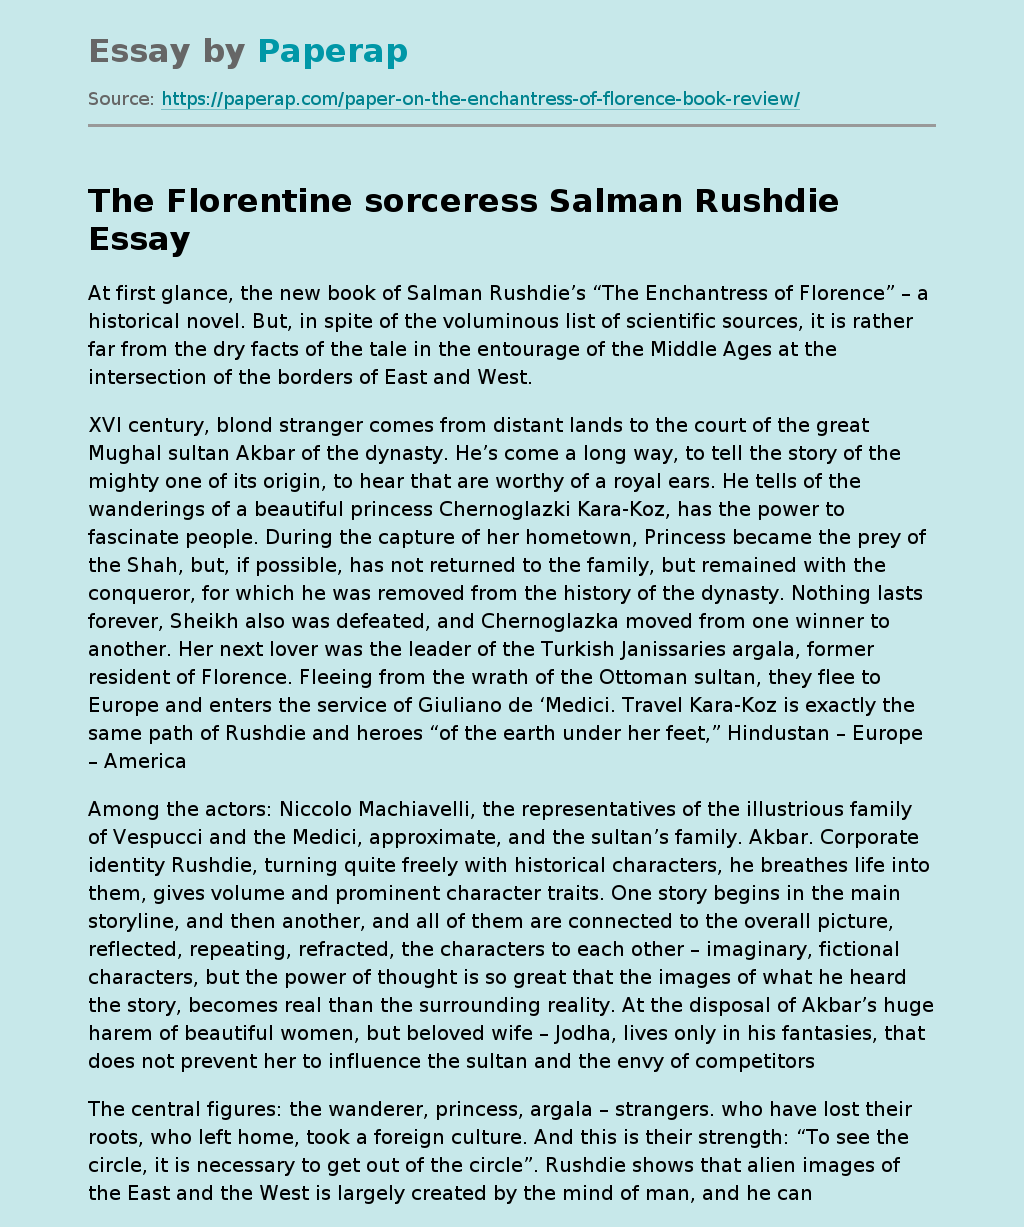 The Florentine sorceress Salman Rushdie